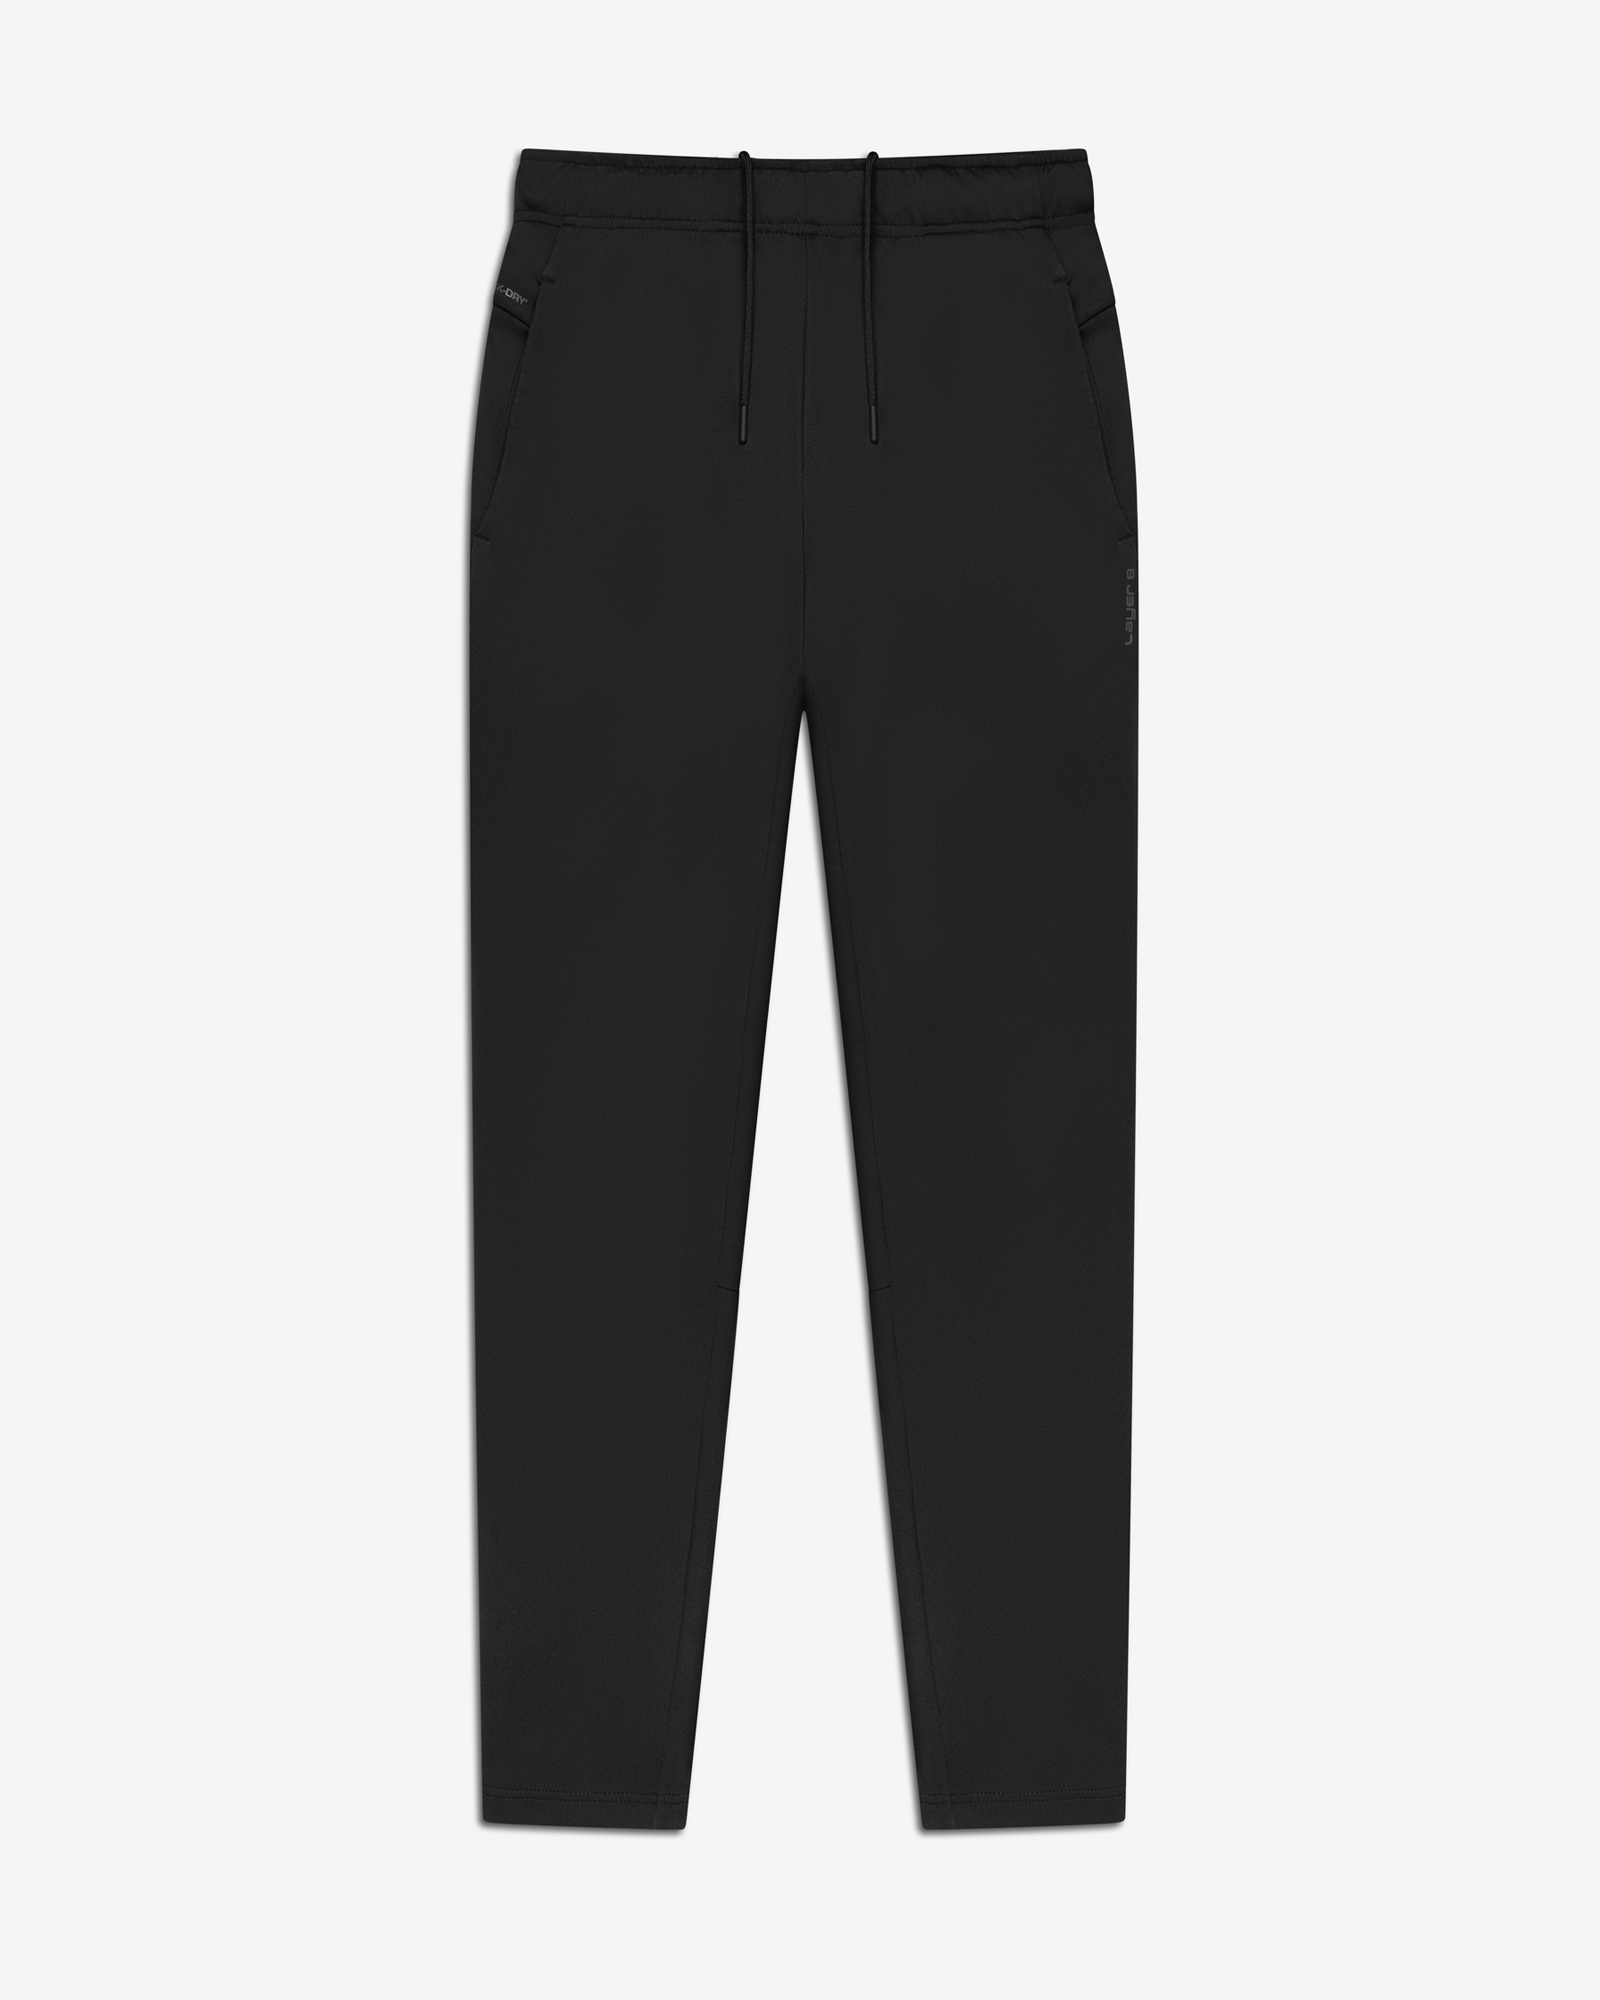 NEW Layer 8 Men Black Qwick-Dry Jogger Running Pants Size Medium